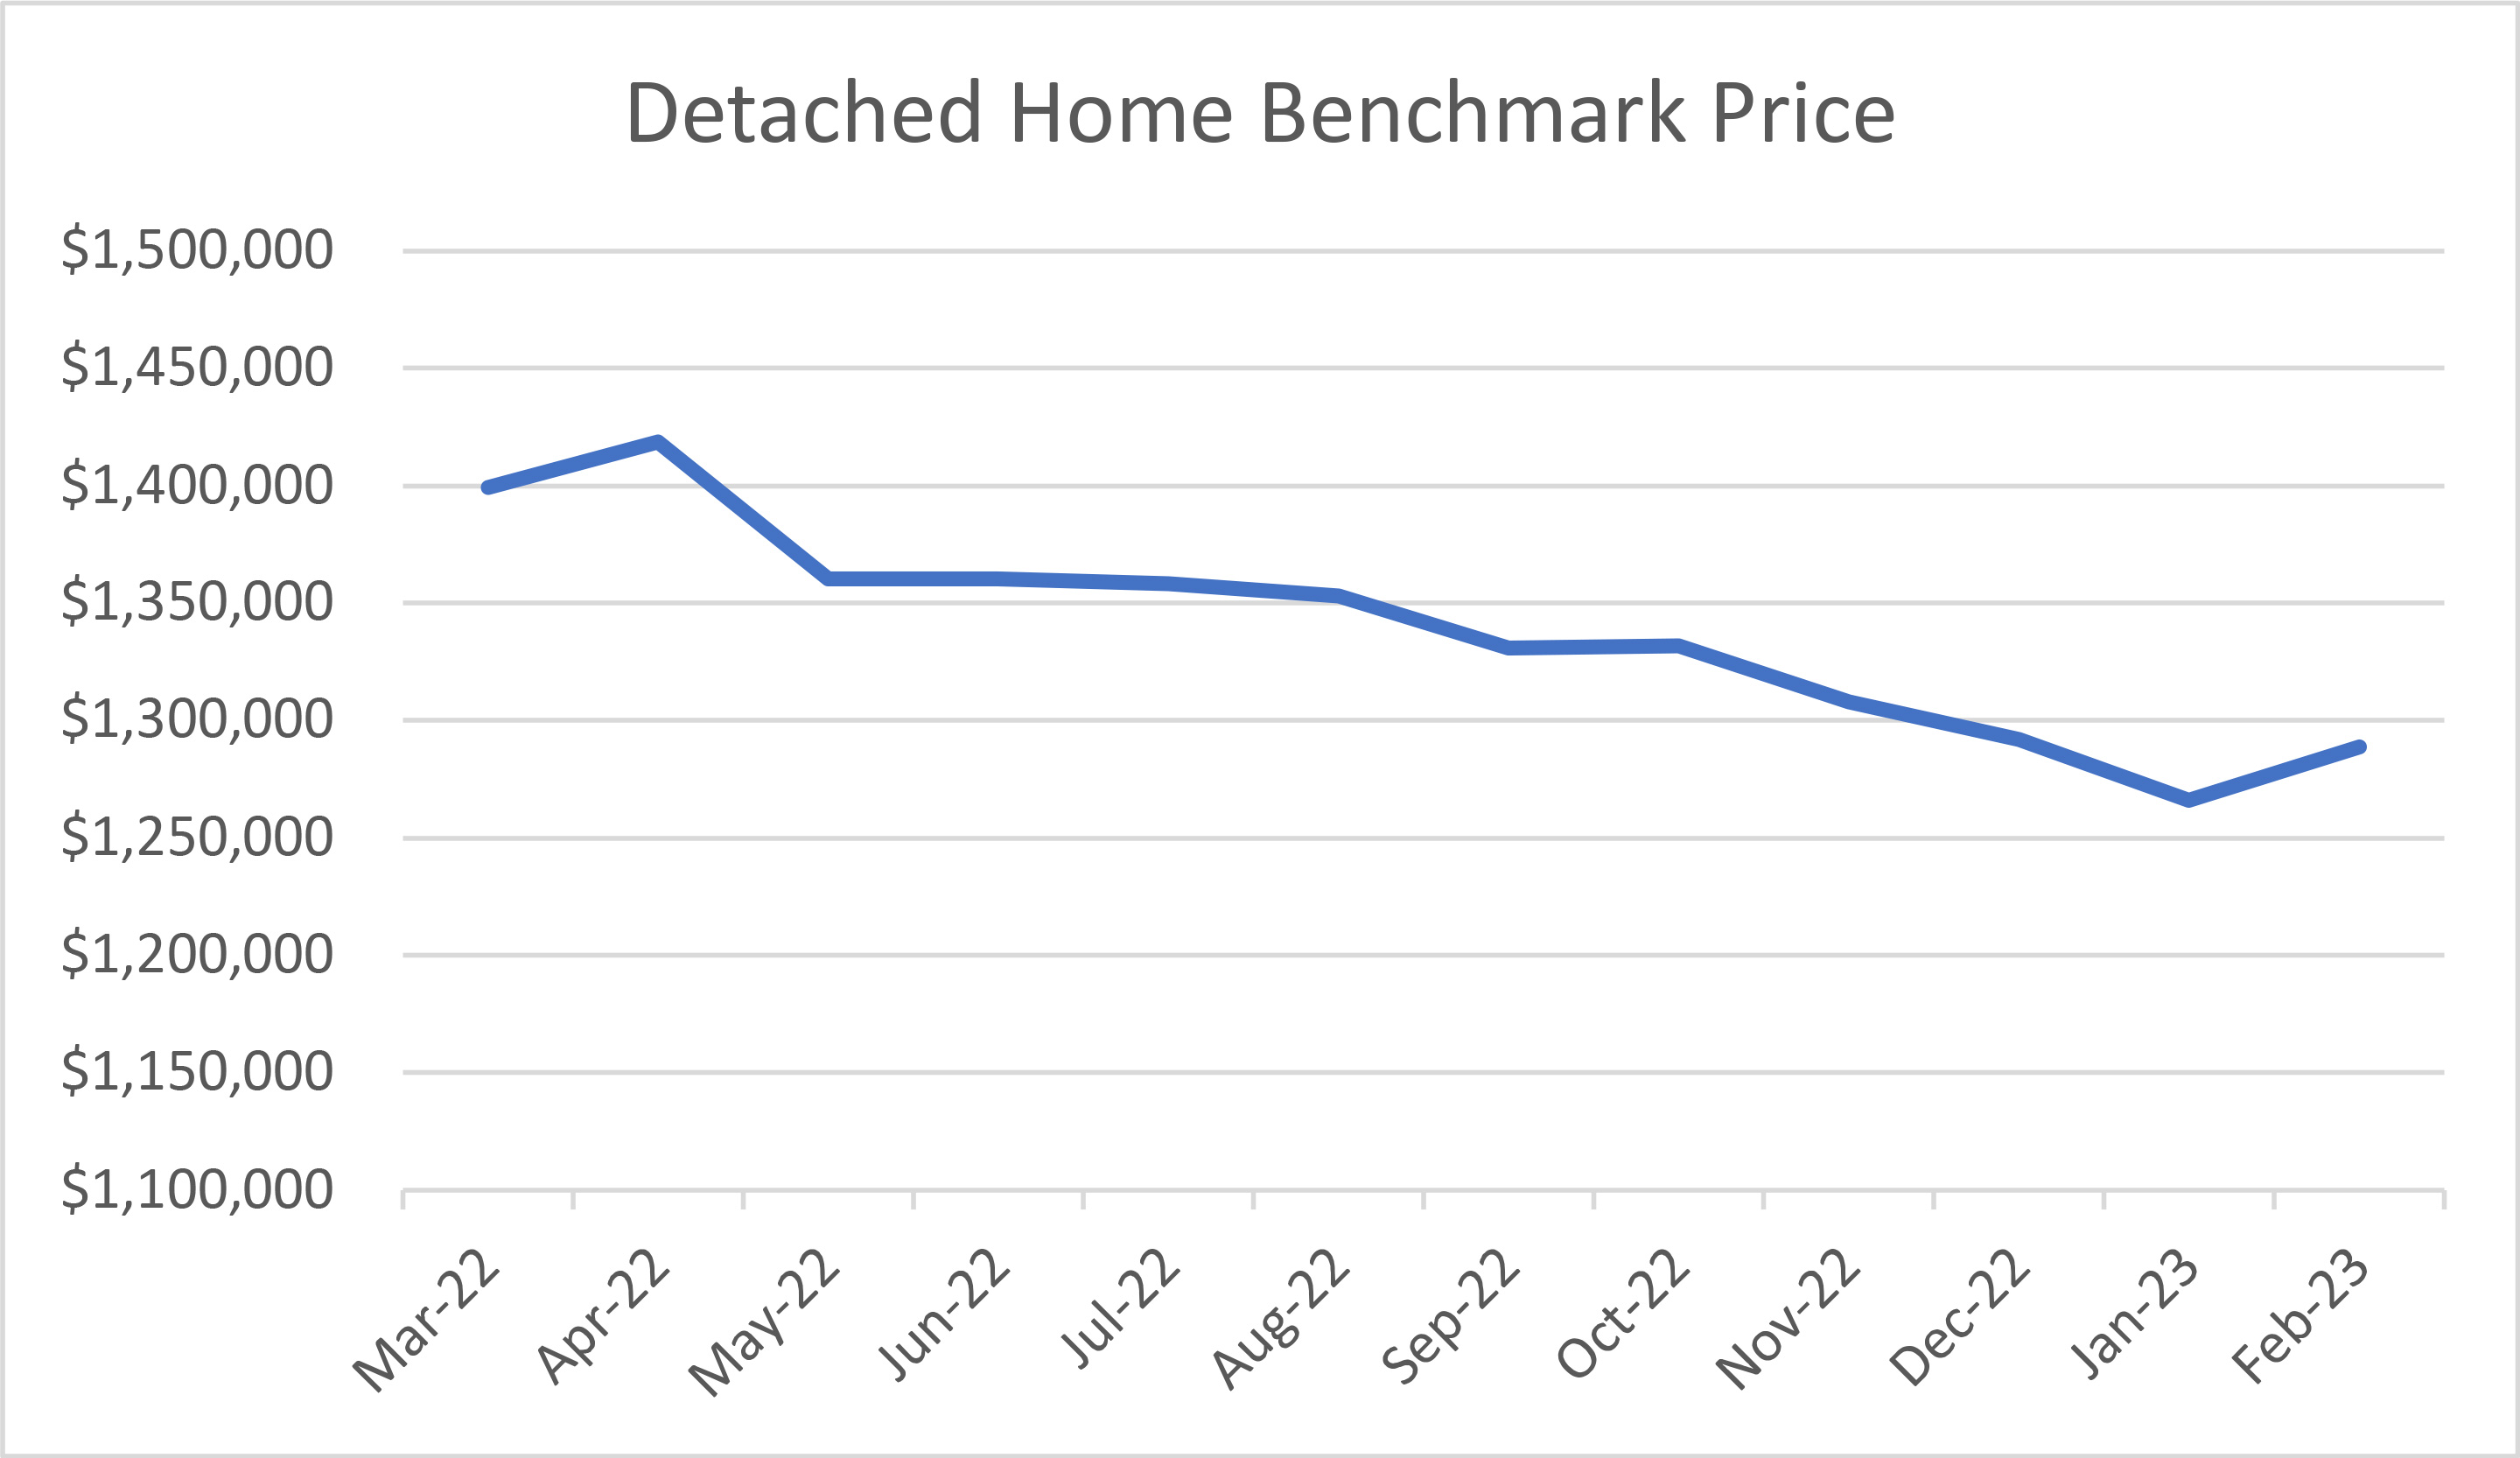 Single Detached Benchmark Price